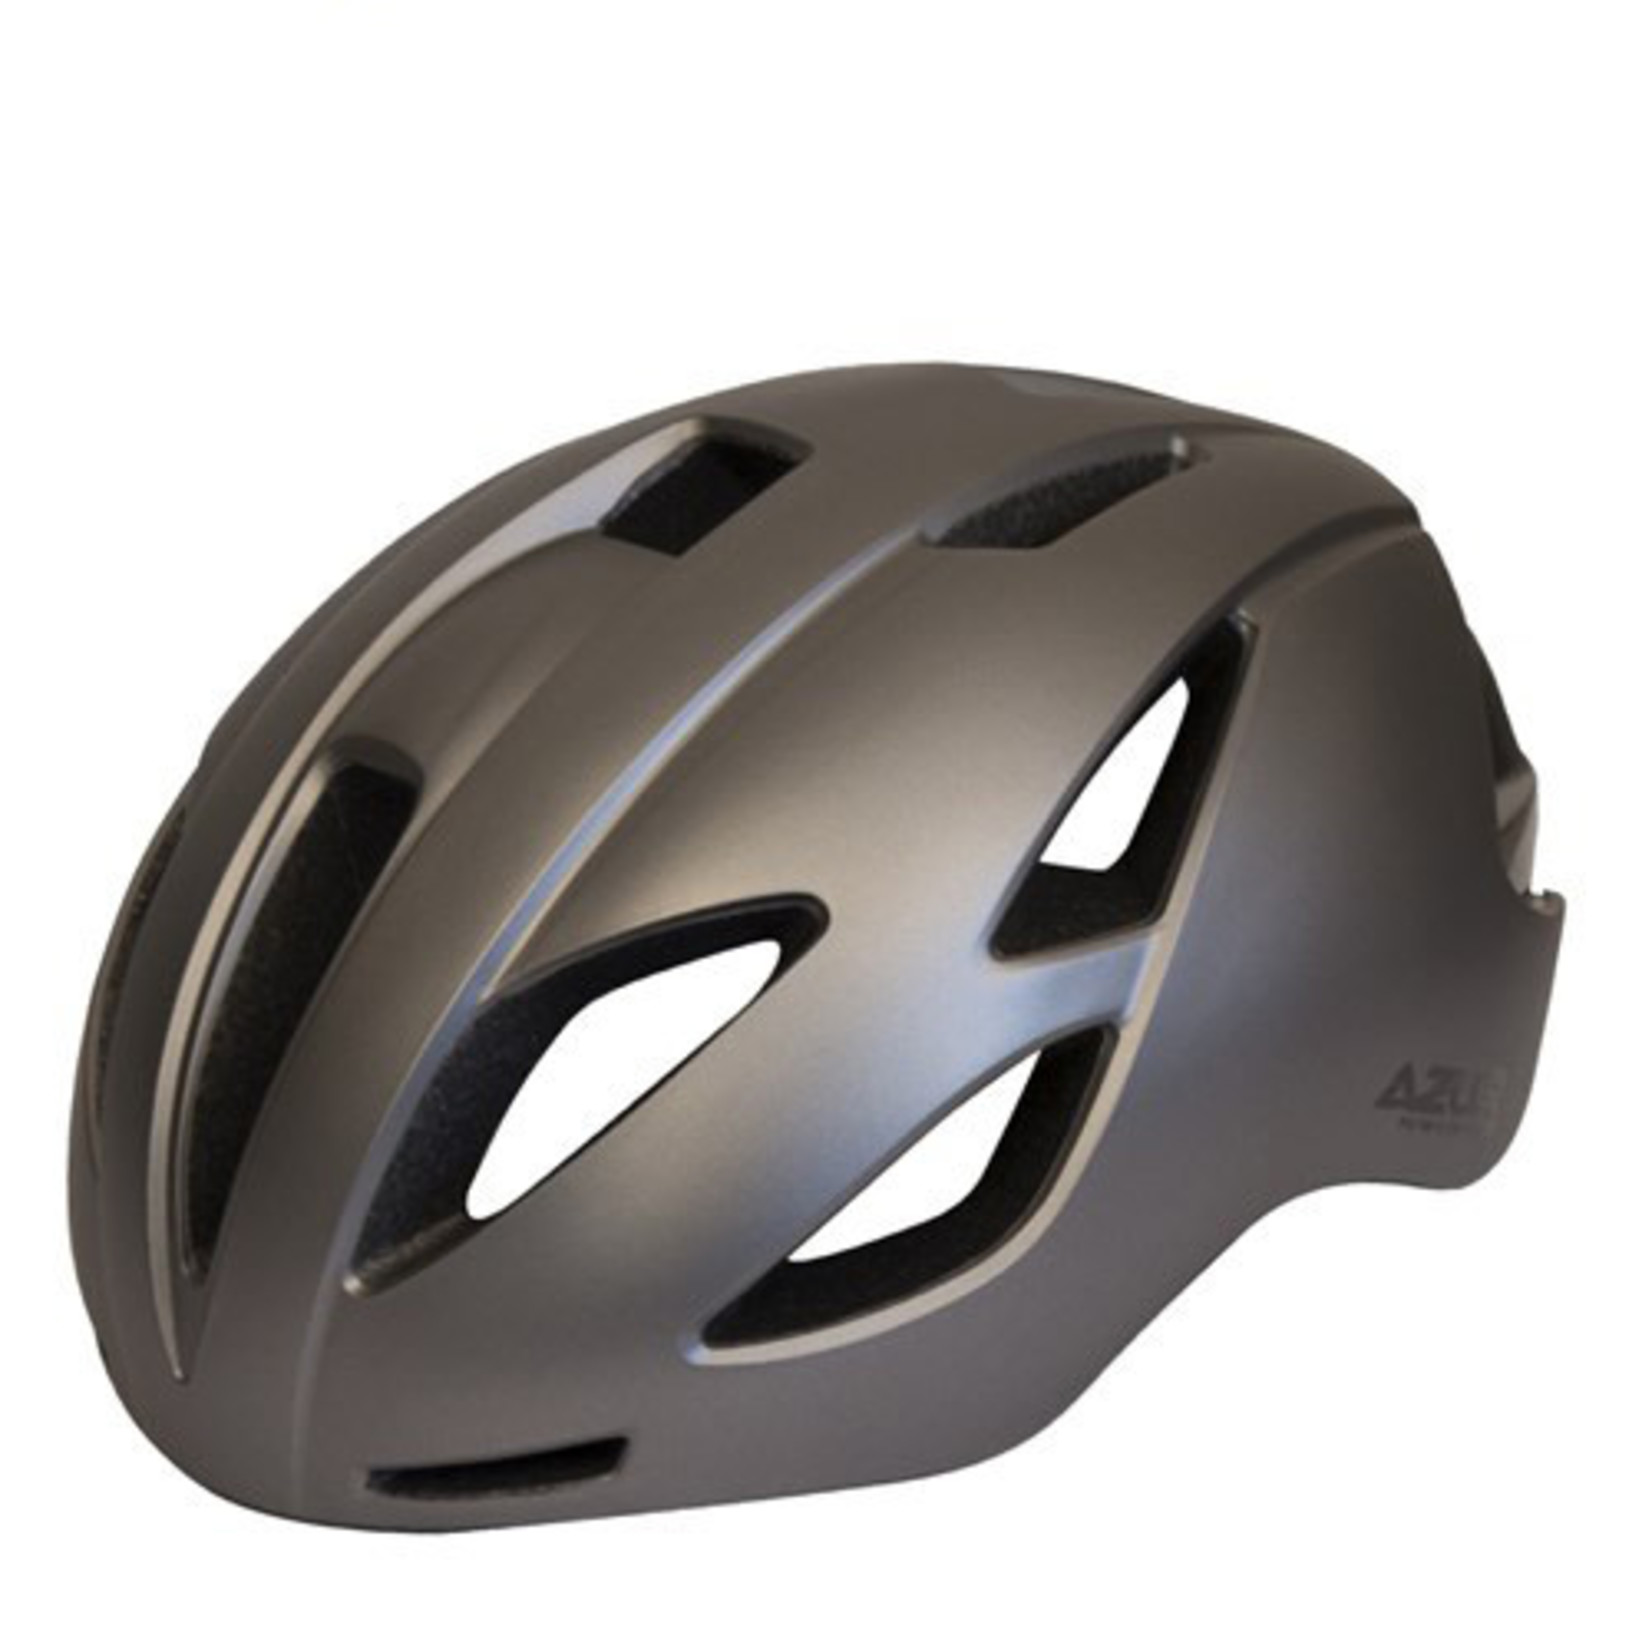 Azur Azur Bike Helmet - RX1 Road - Titanium Lightweight In-Mould Shell